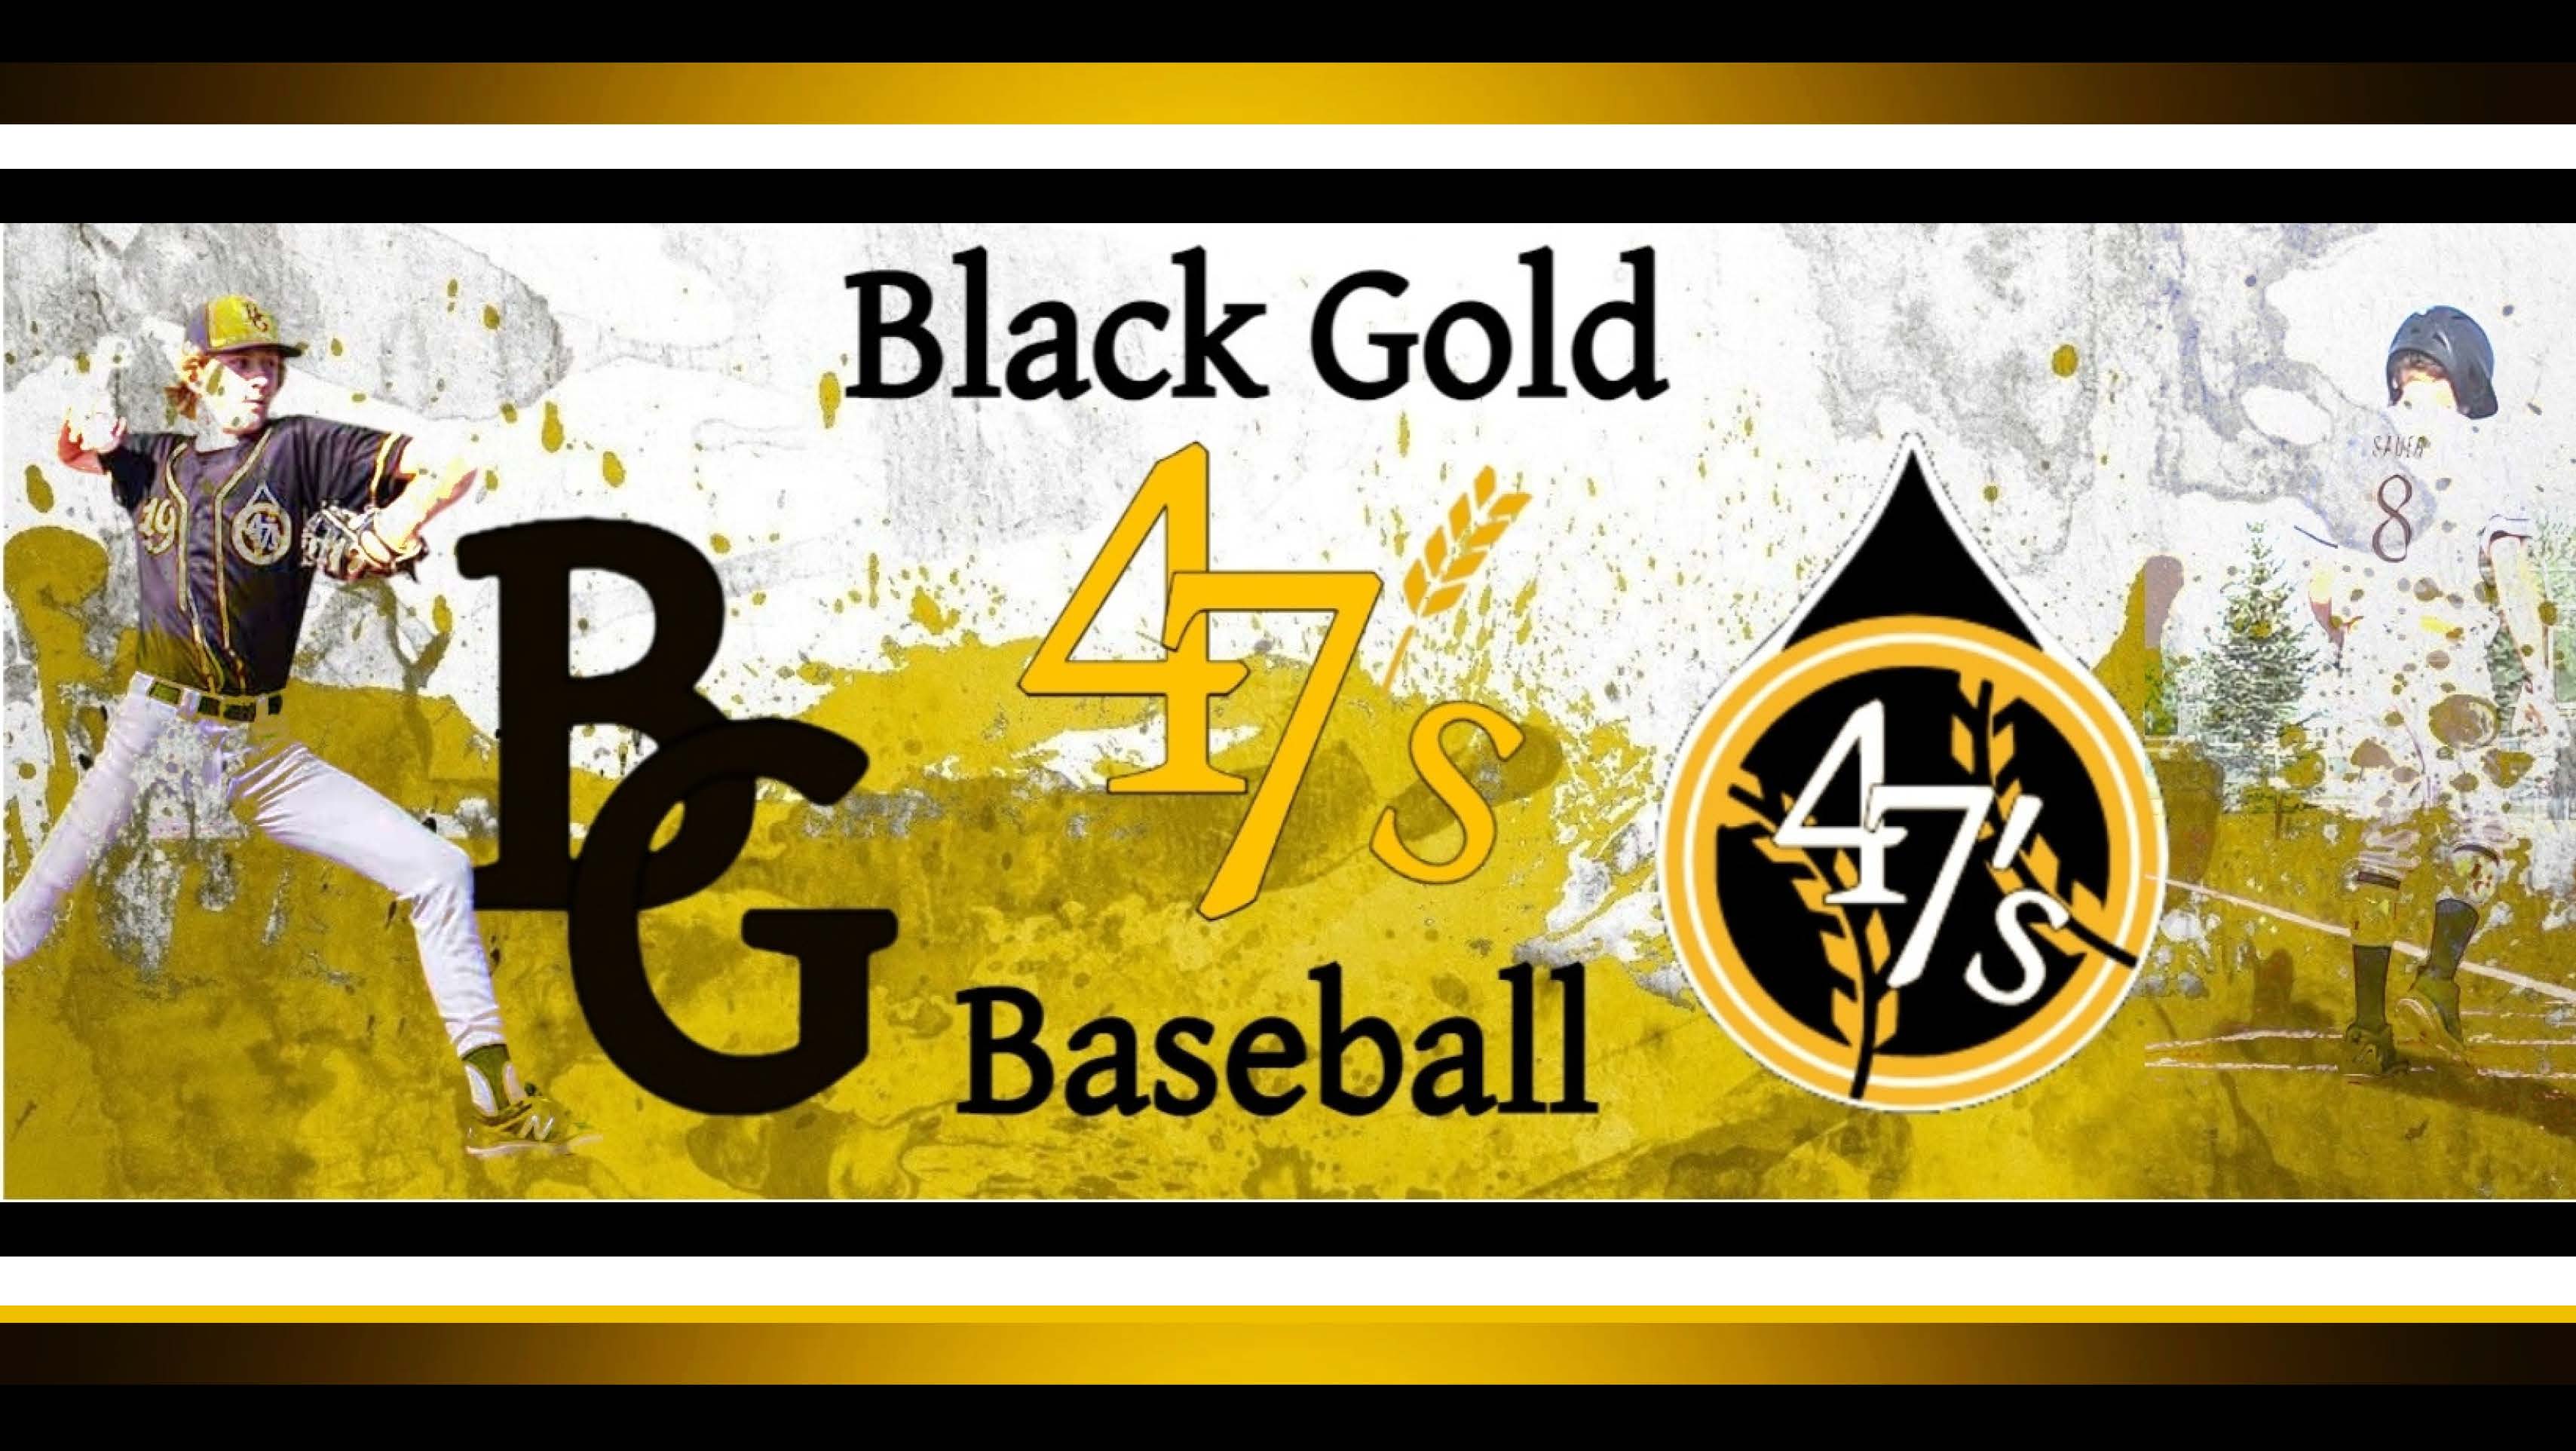 Black Gold Baseball : Website by RAMP InterActive